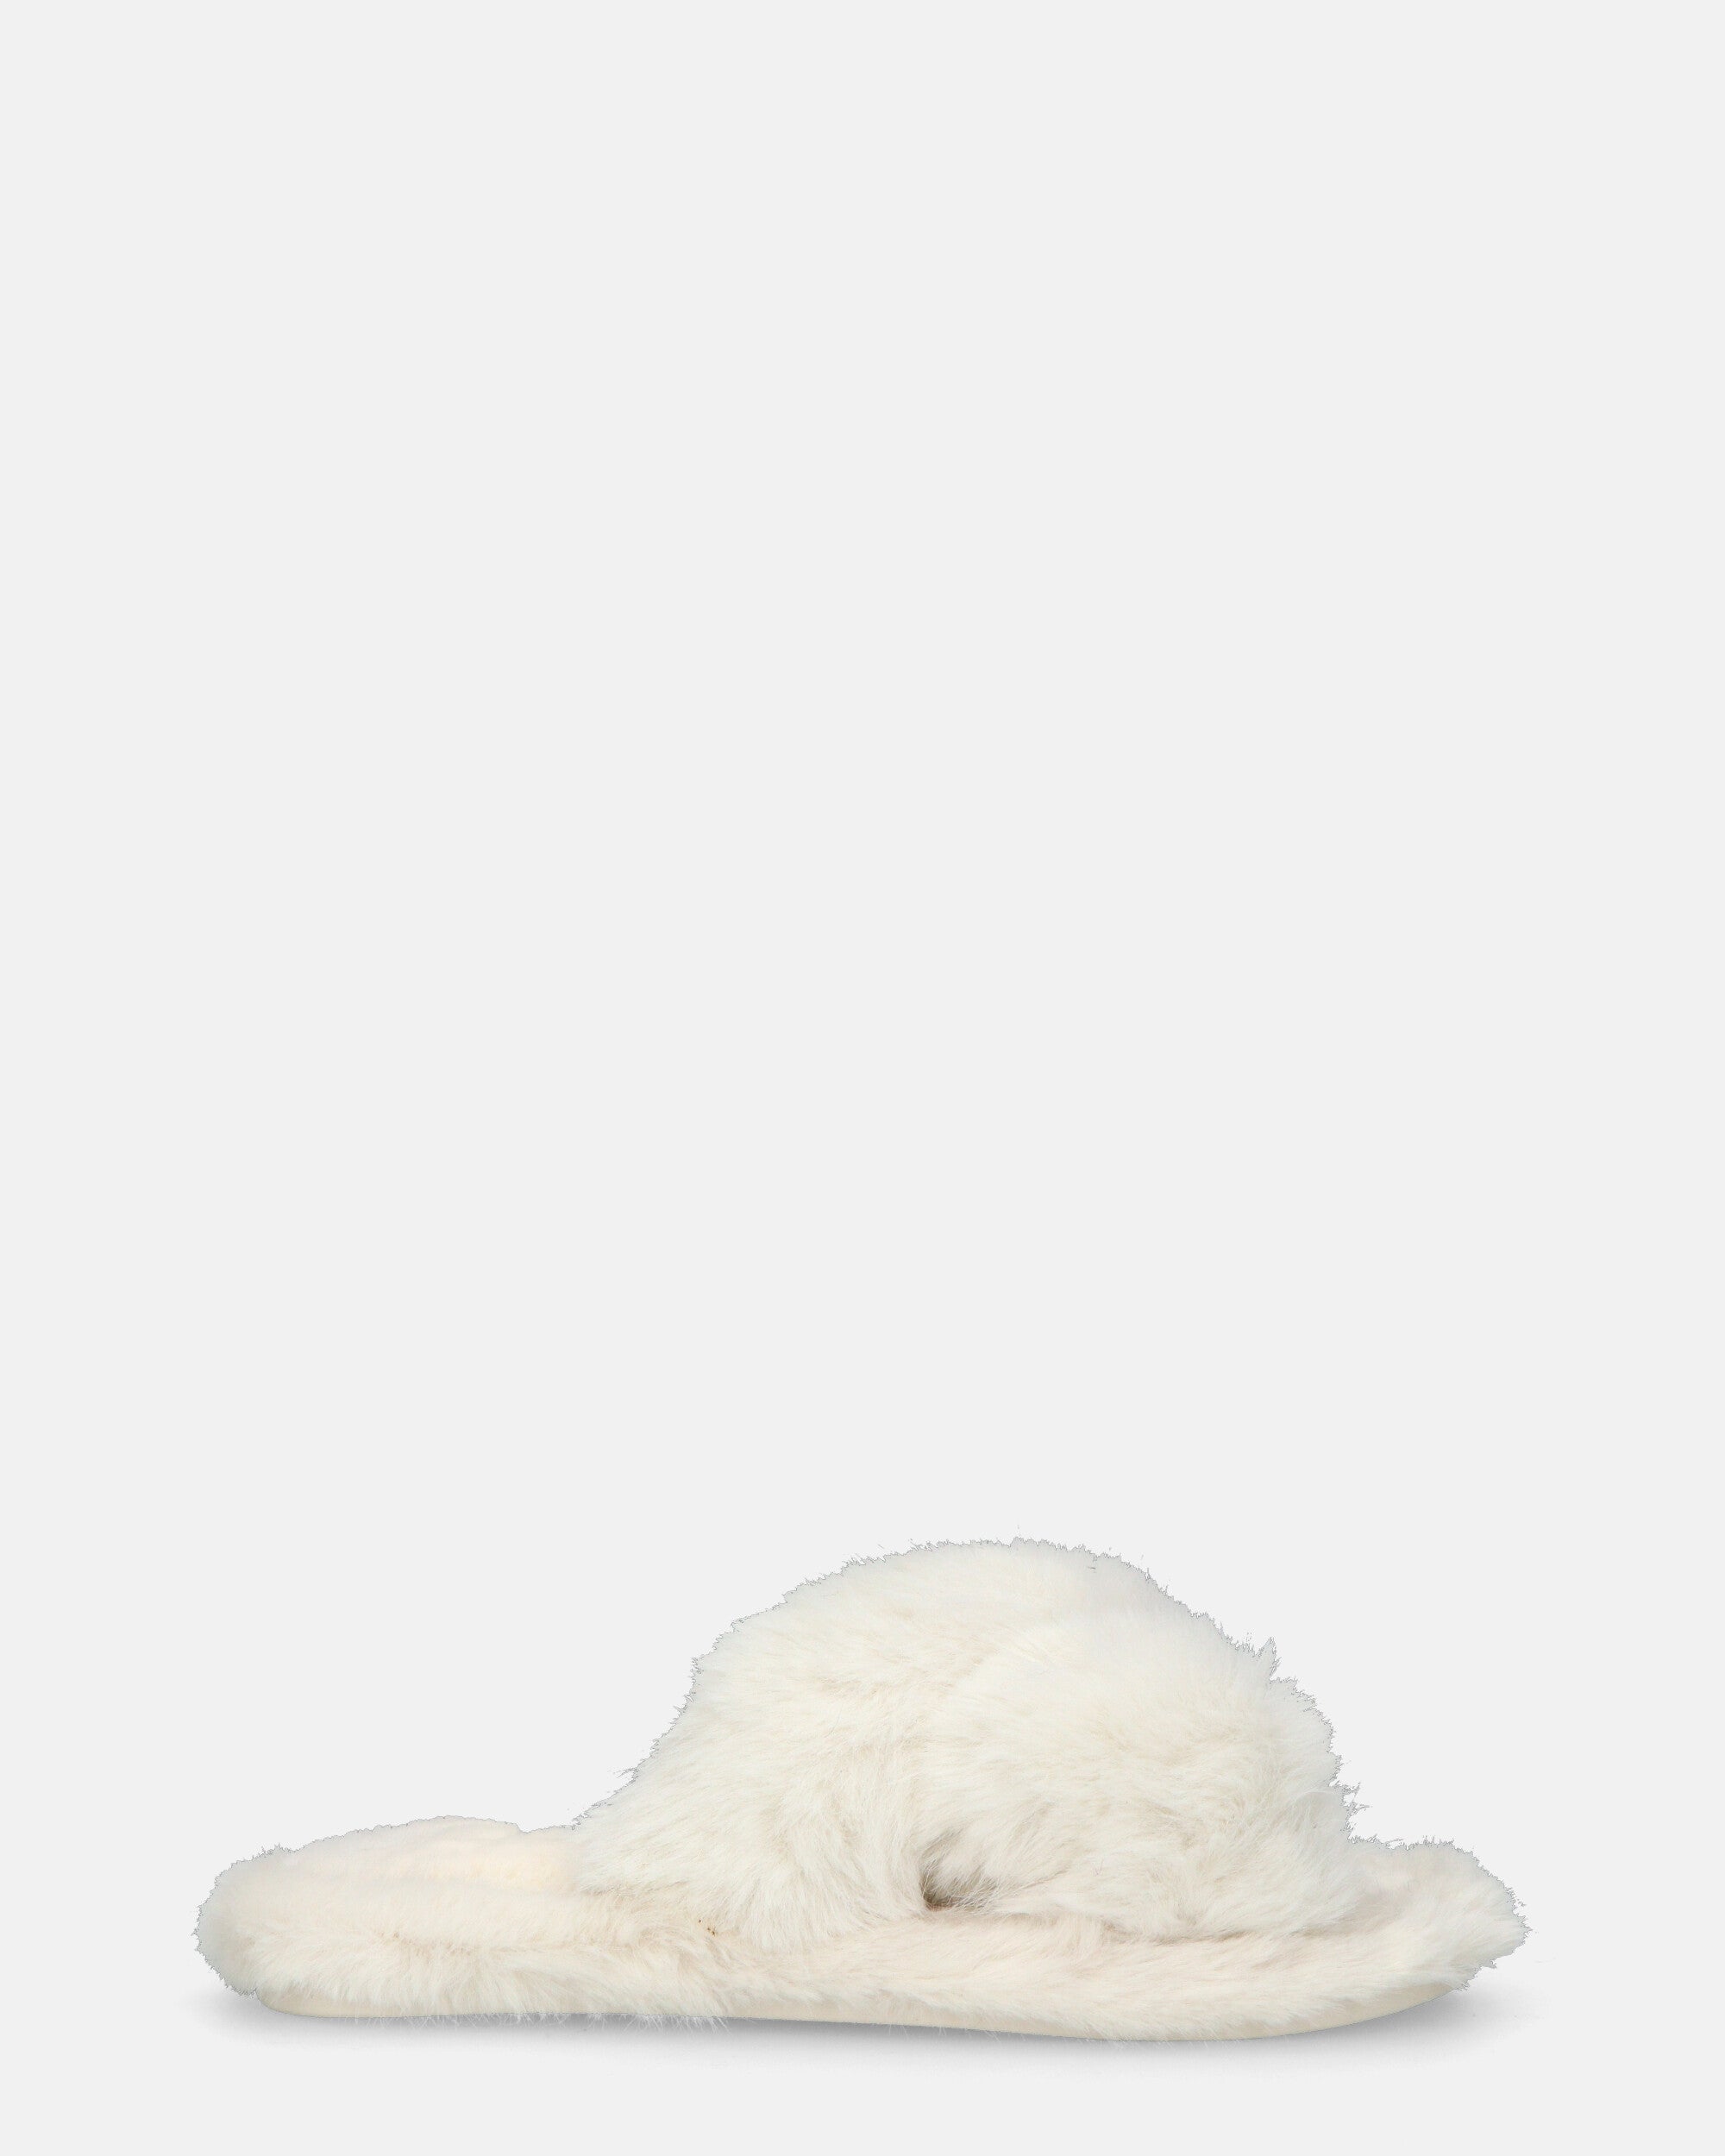 SUZUE - white fur open toe slippers